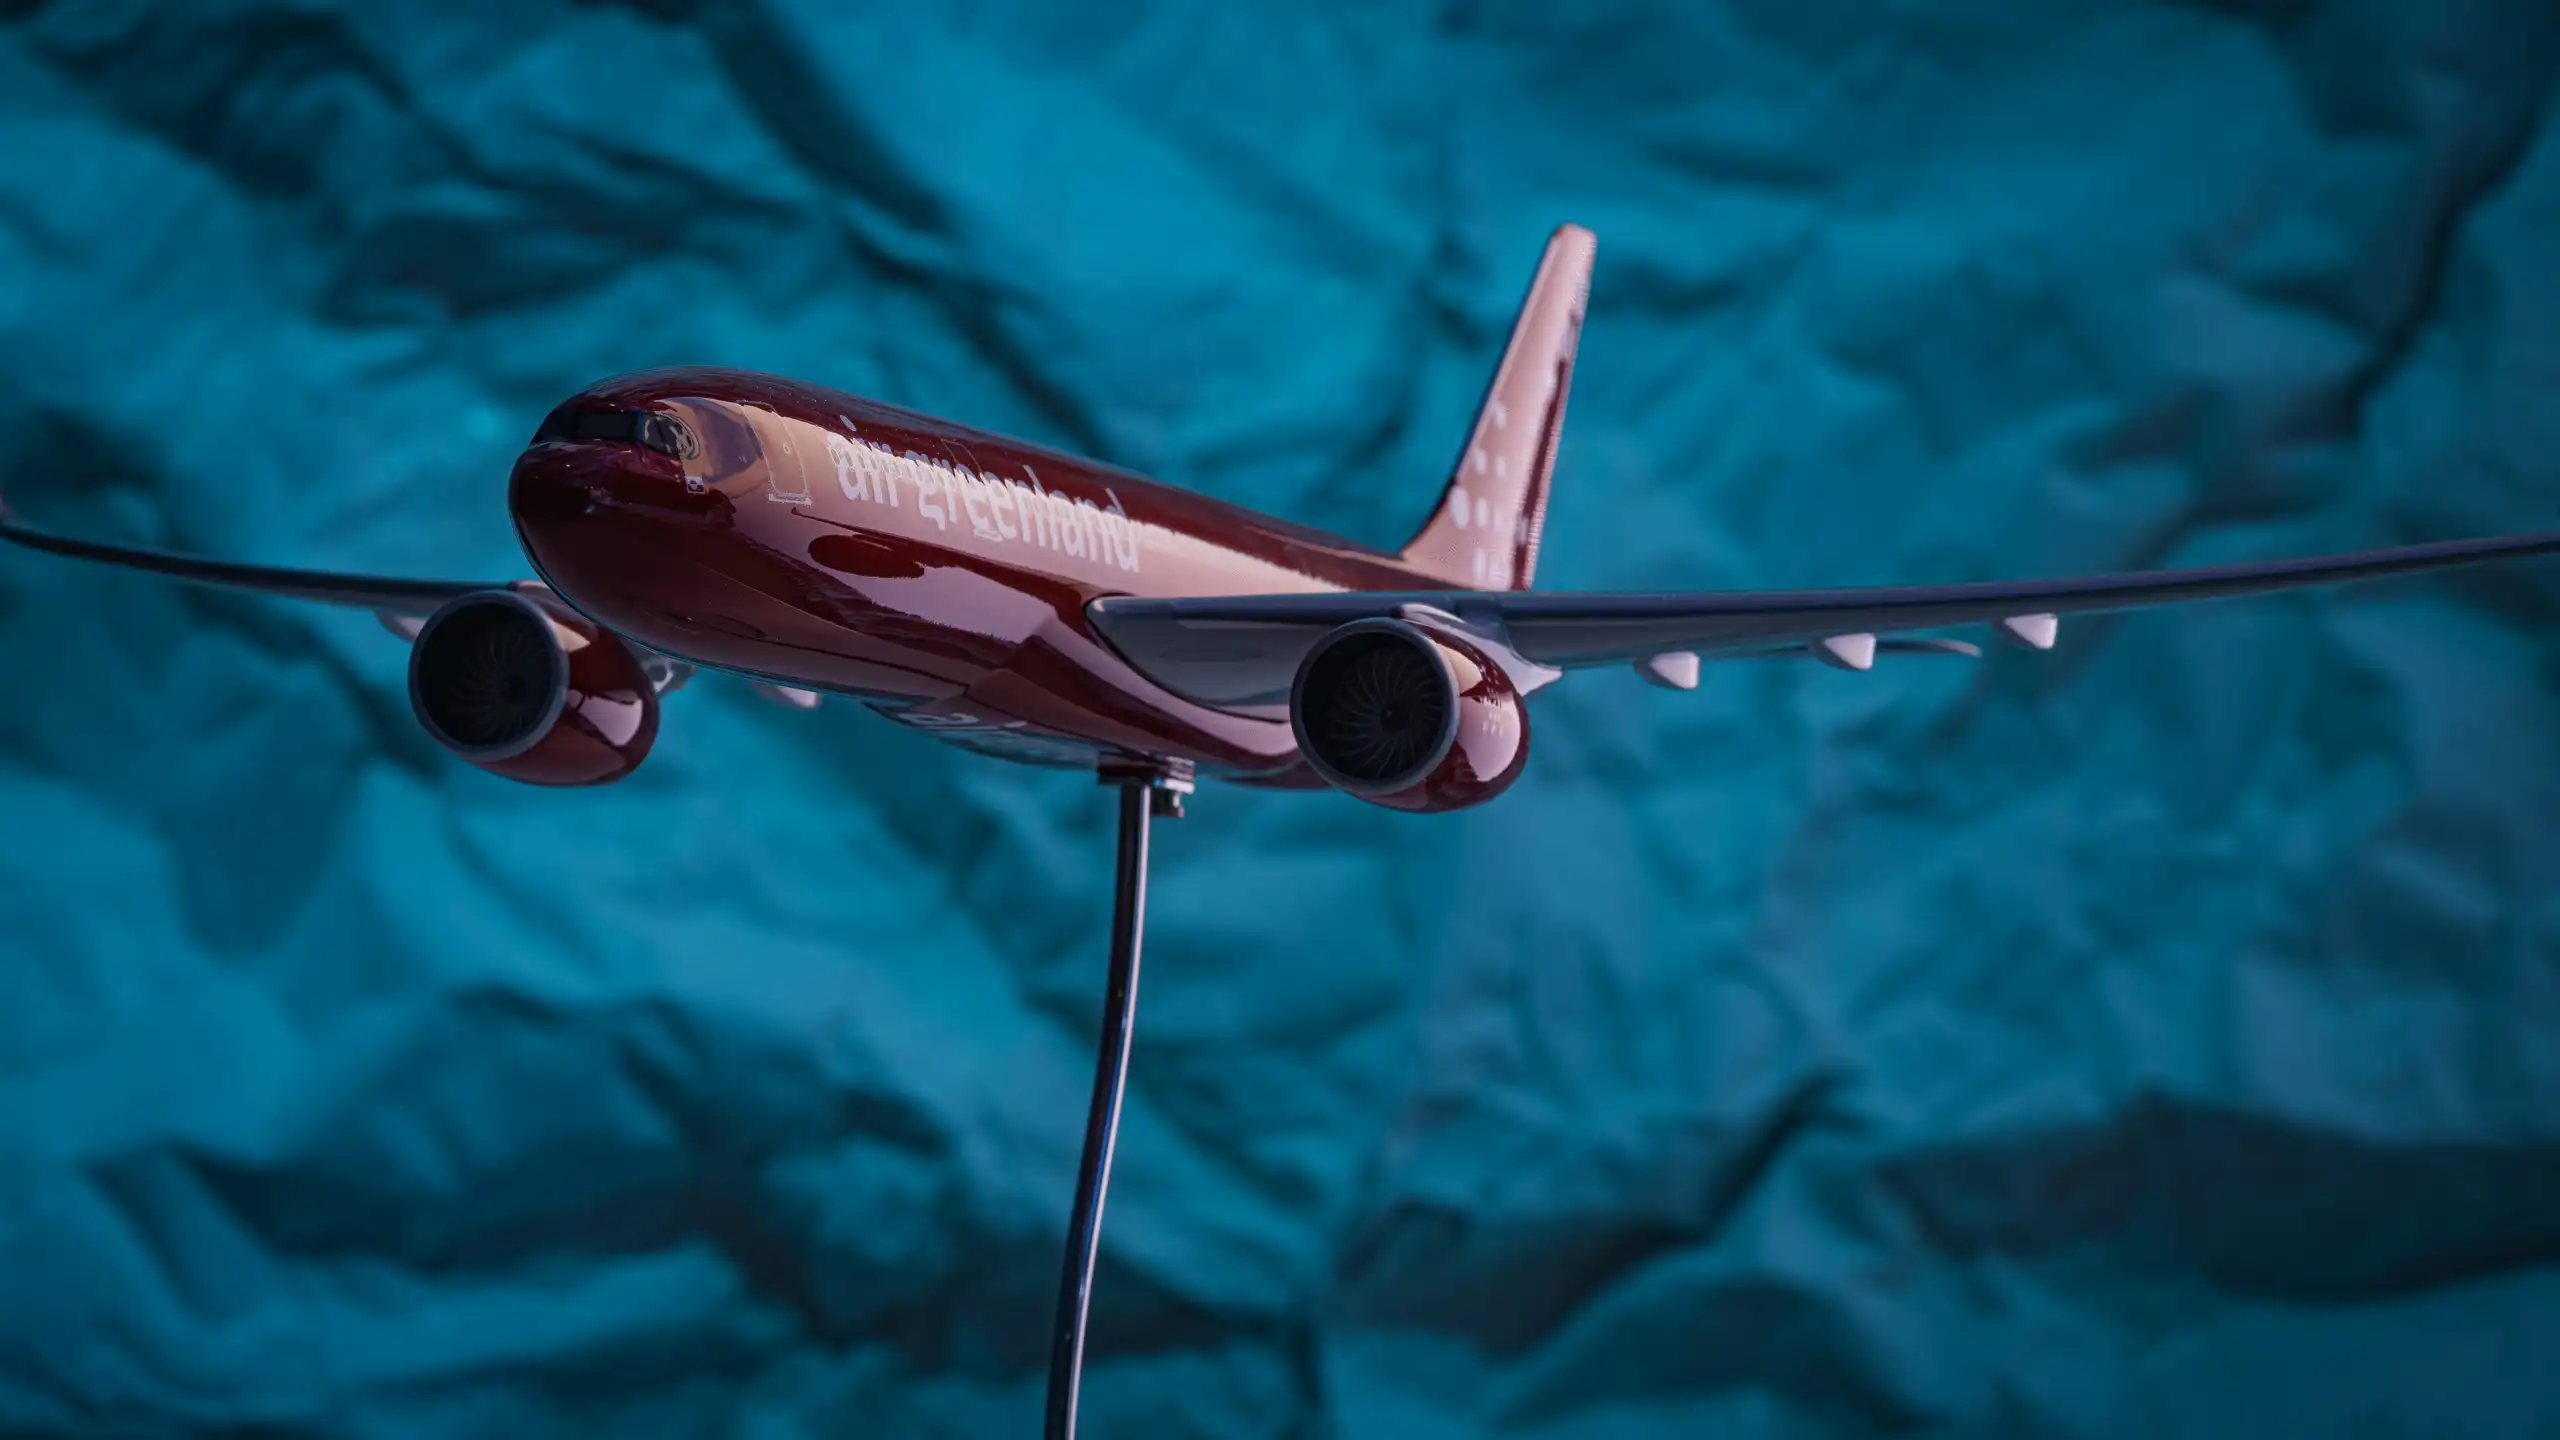 Air Greenlandimiit Airbus-imut tunissut aappaa